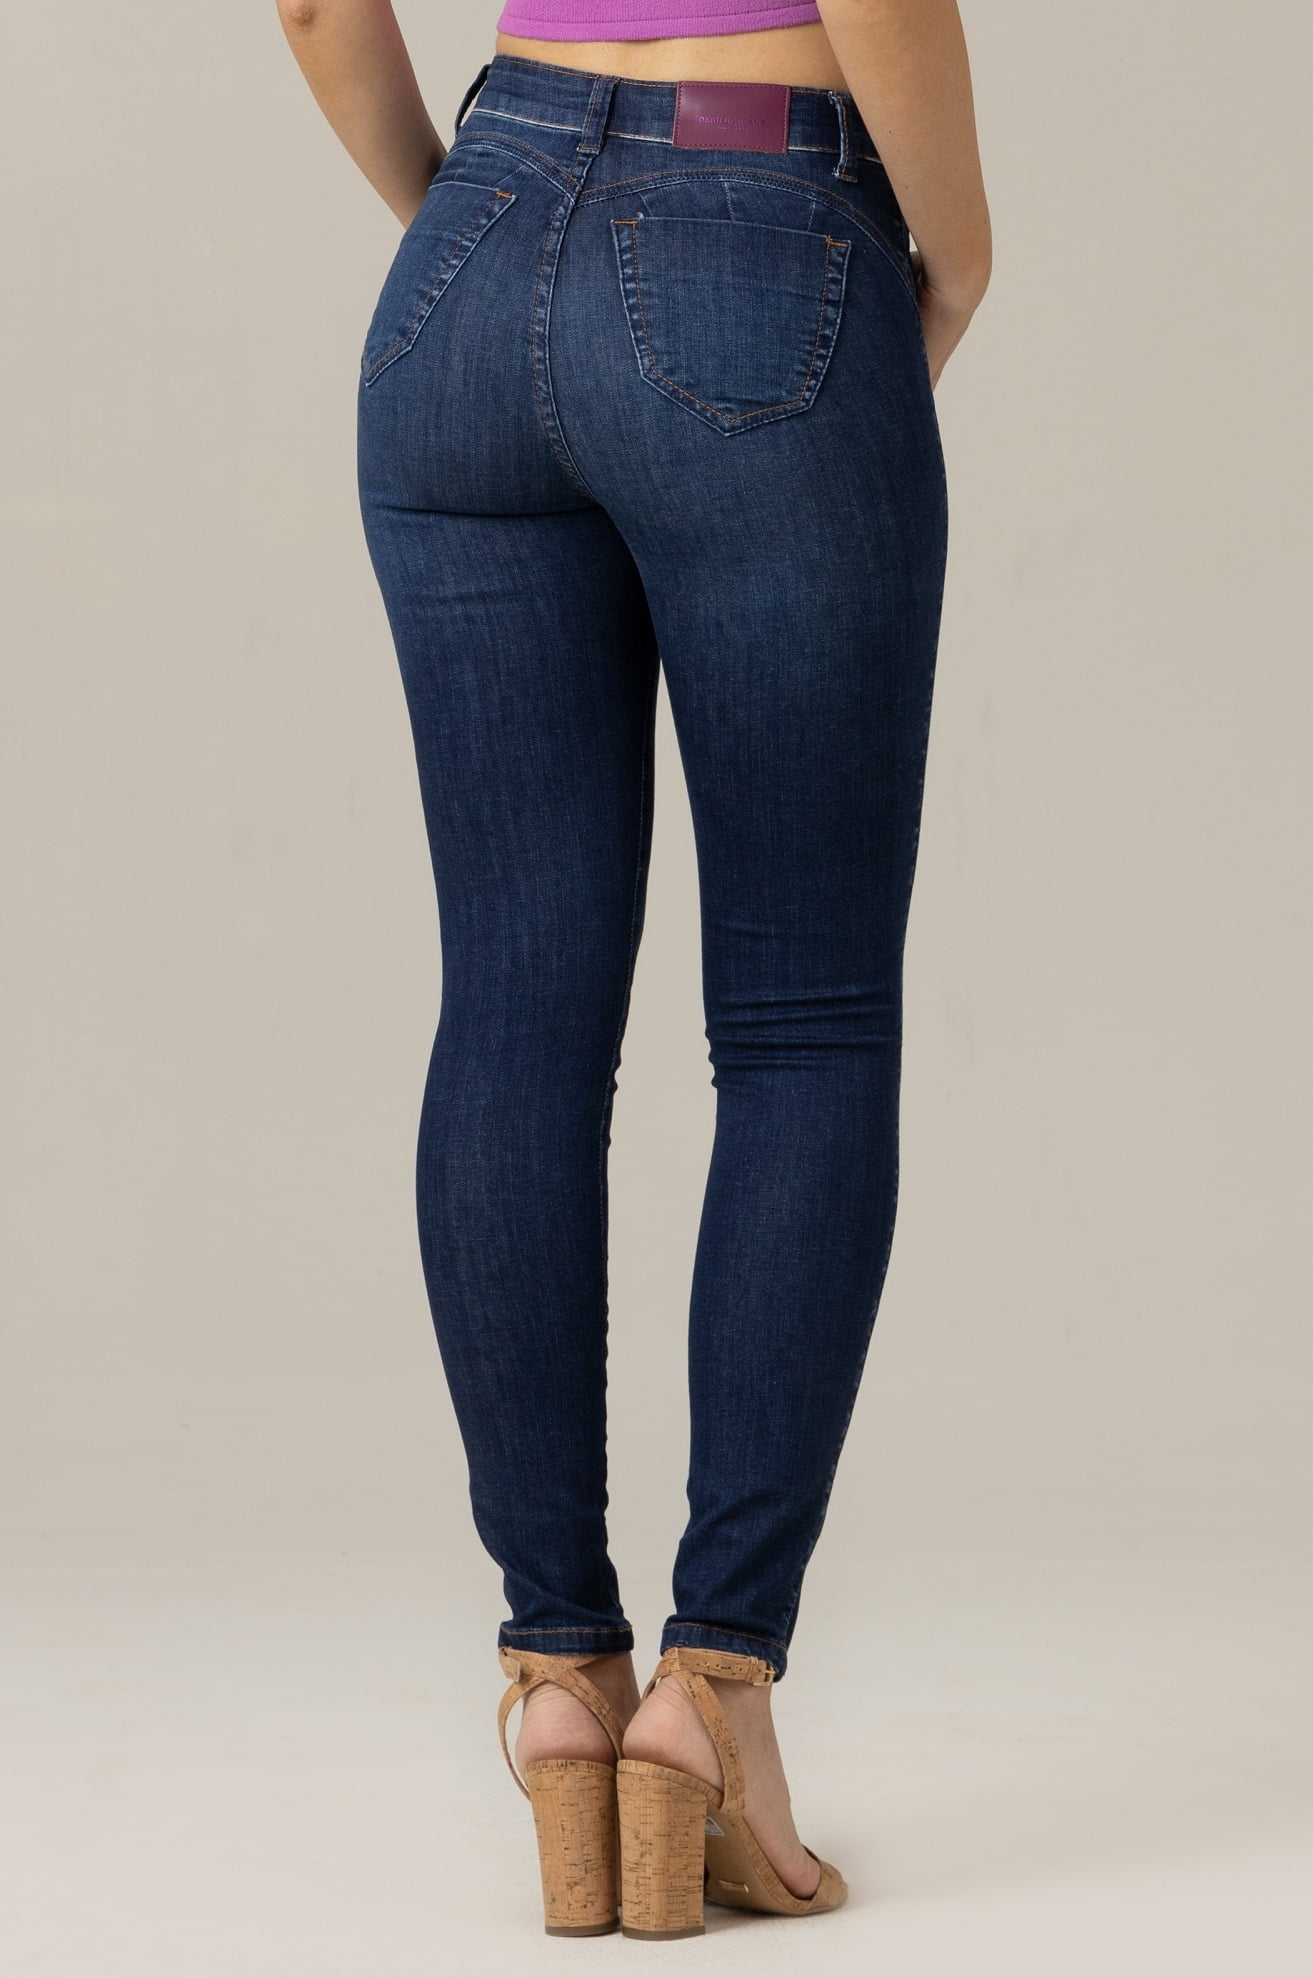 Calça Jeans Feminina Push Up F2022140 - Oxiblue Jeans